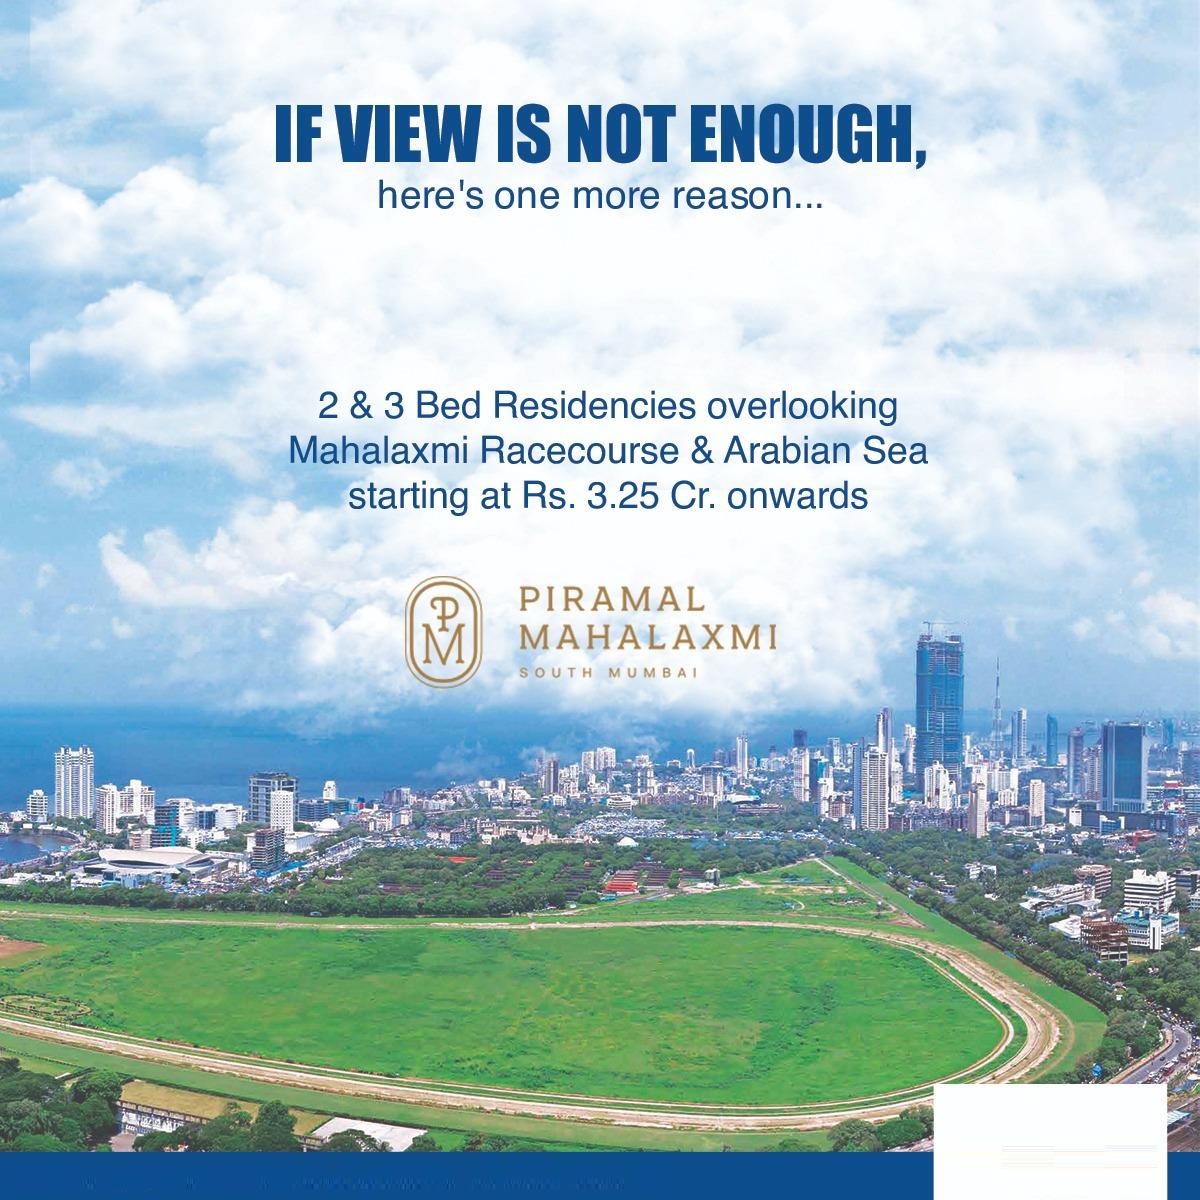 If view is not enough here's one more reason at Piramal Mahalaxmi, Mumbai Update